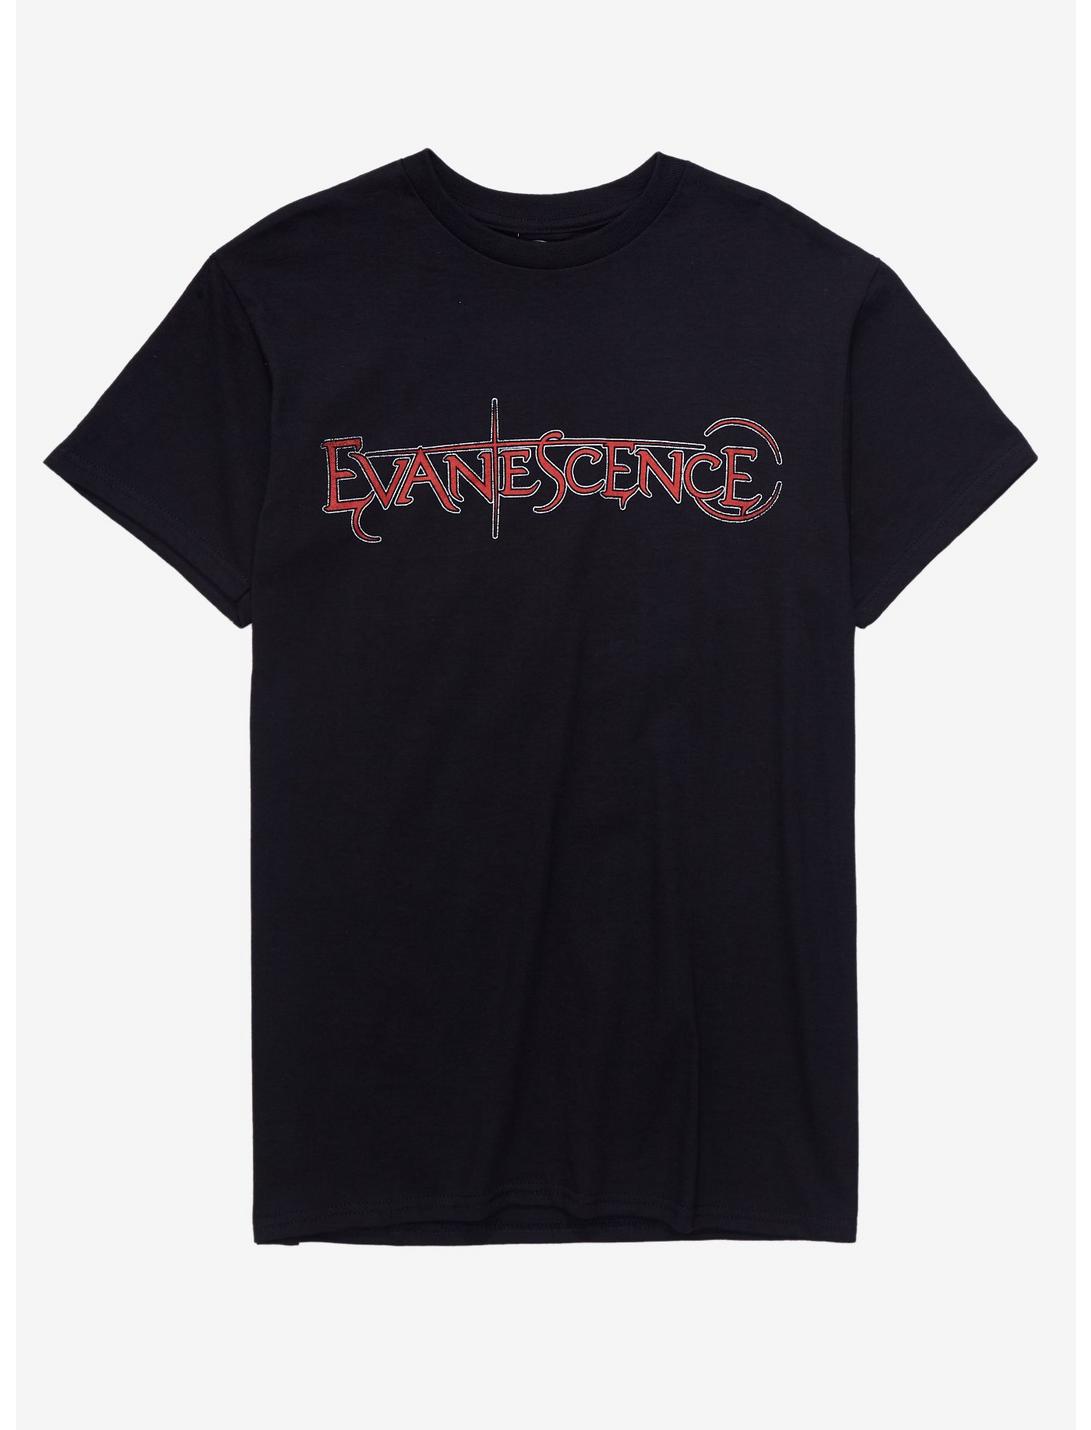 Evanescence Group Photo Girls T-Shirt, BLACK, hi-res